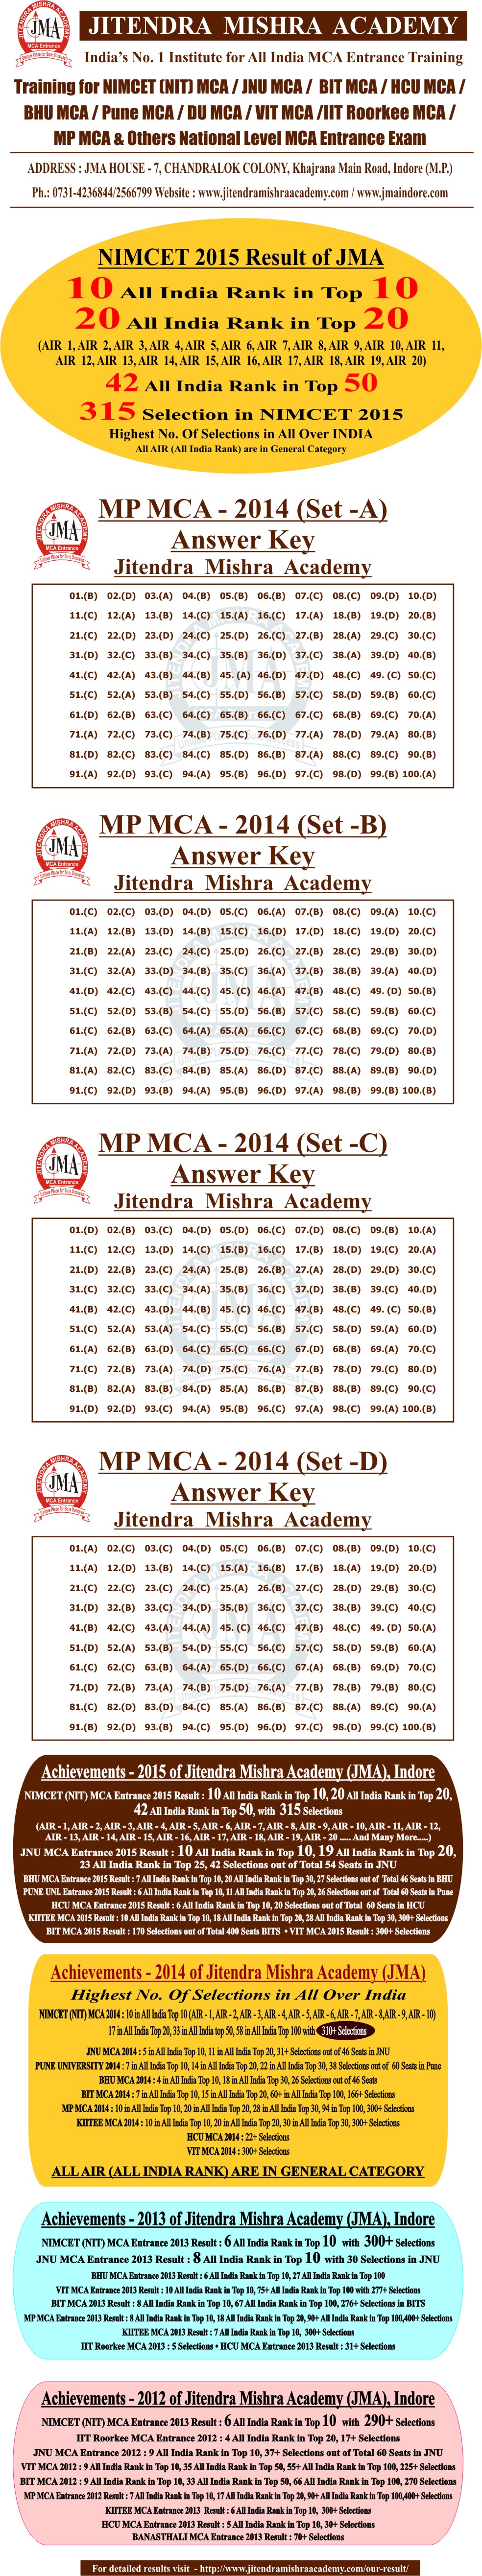 MP MCA - 2014 answerkey (N)